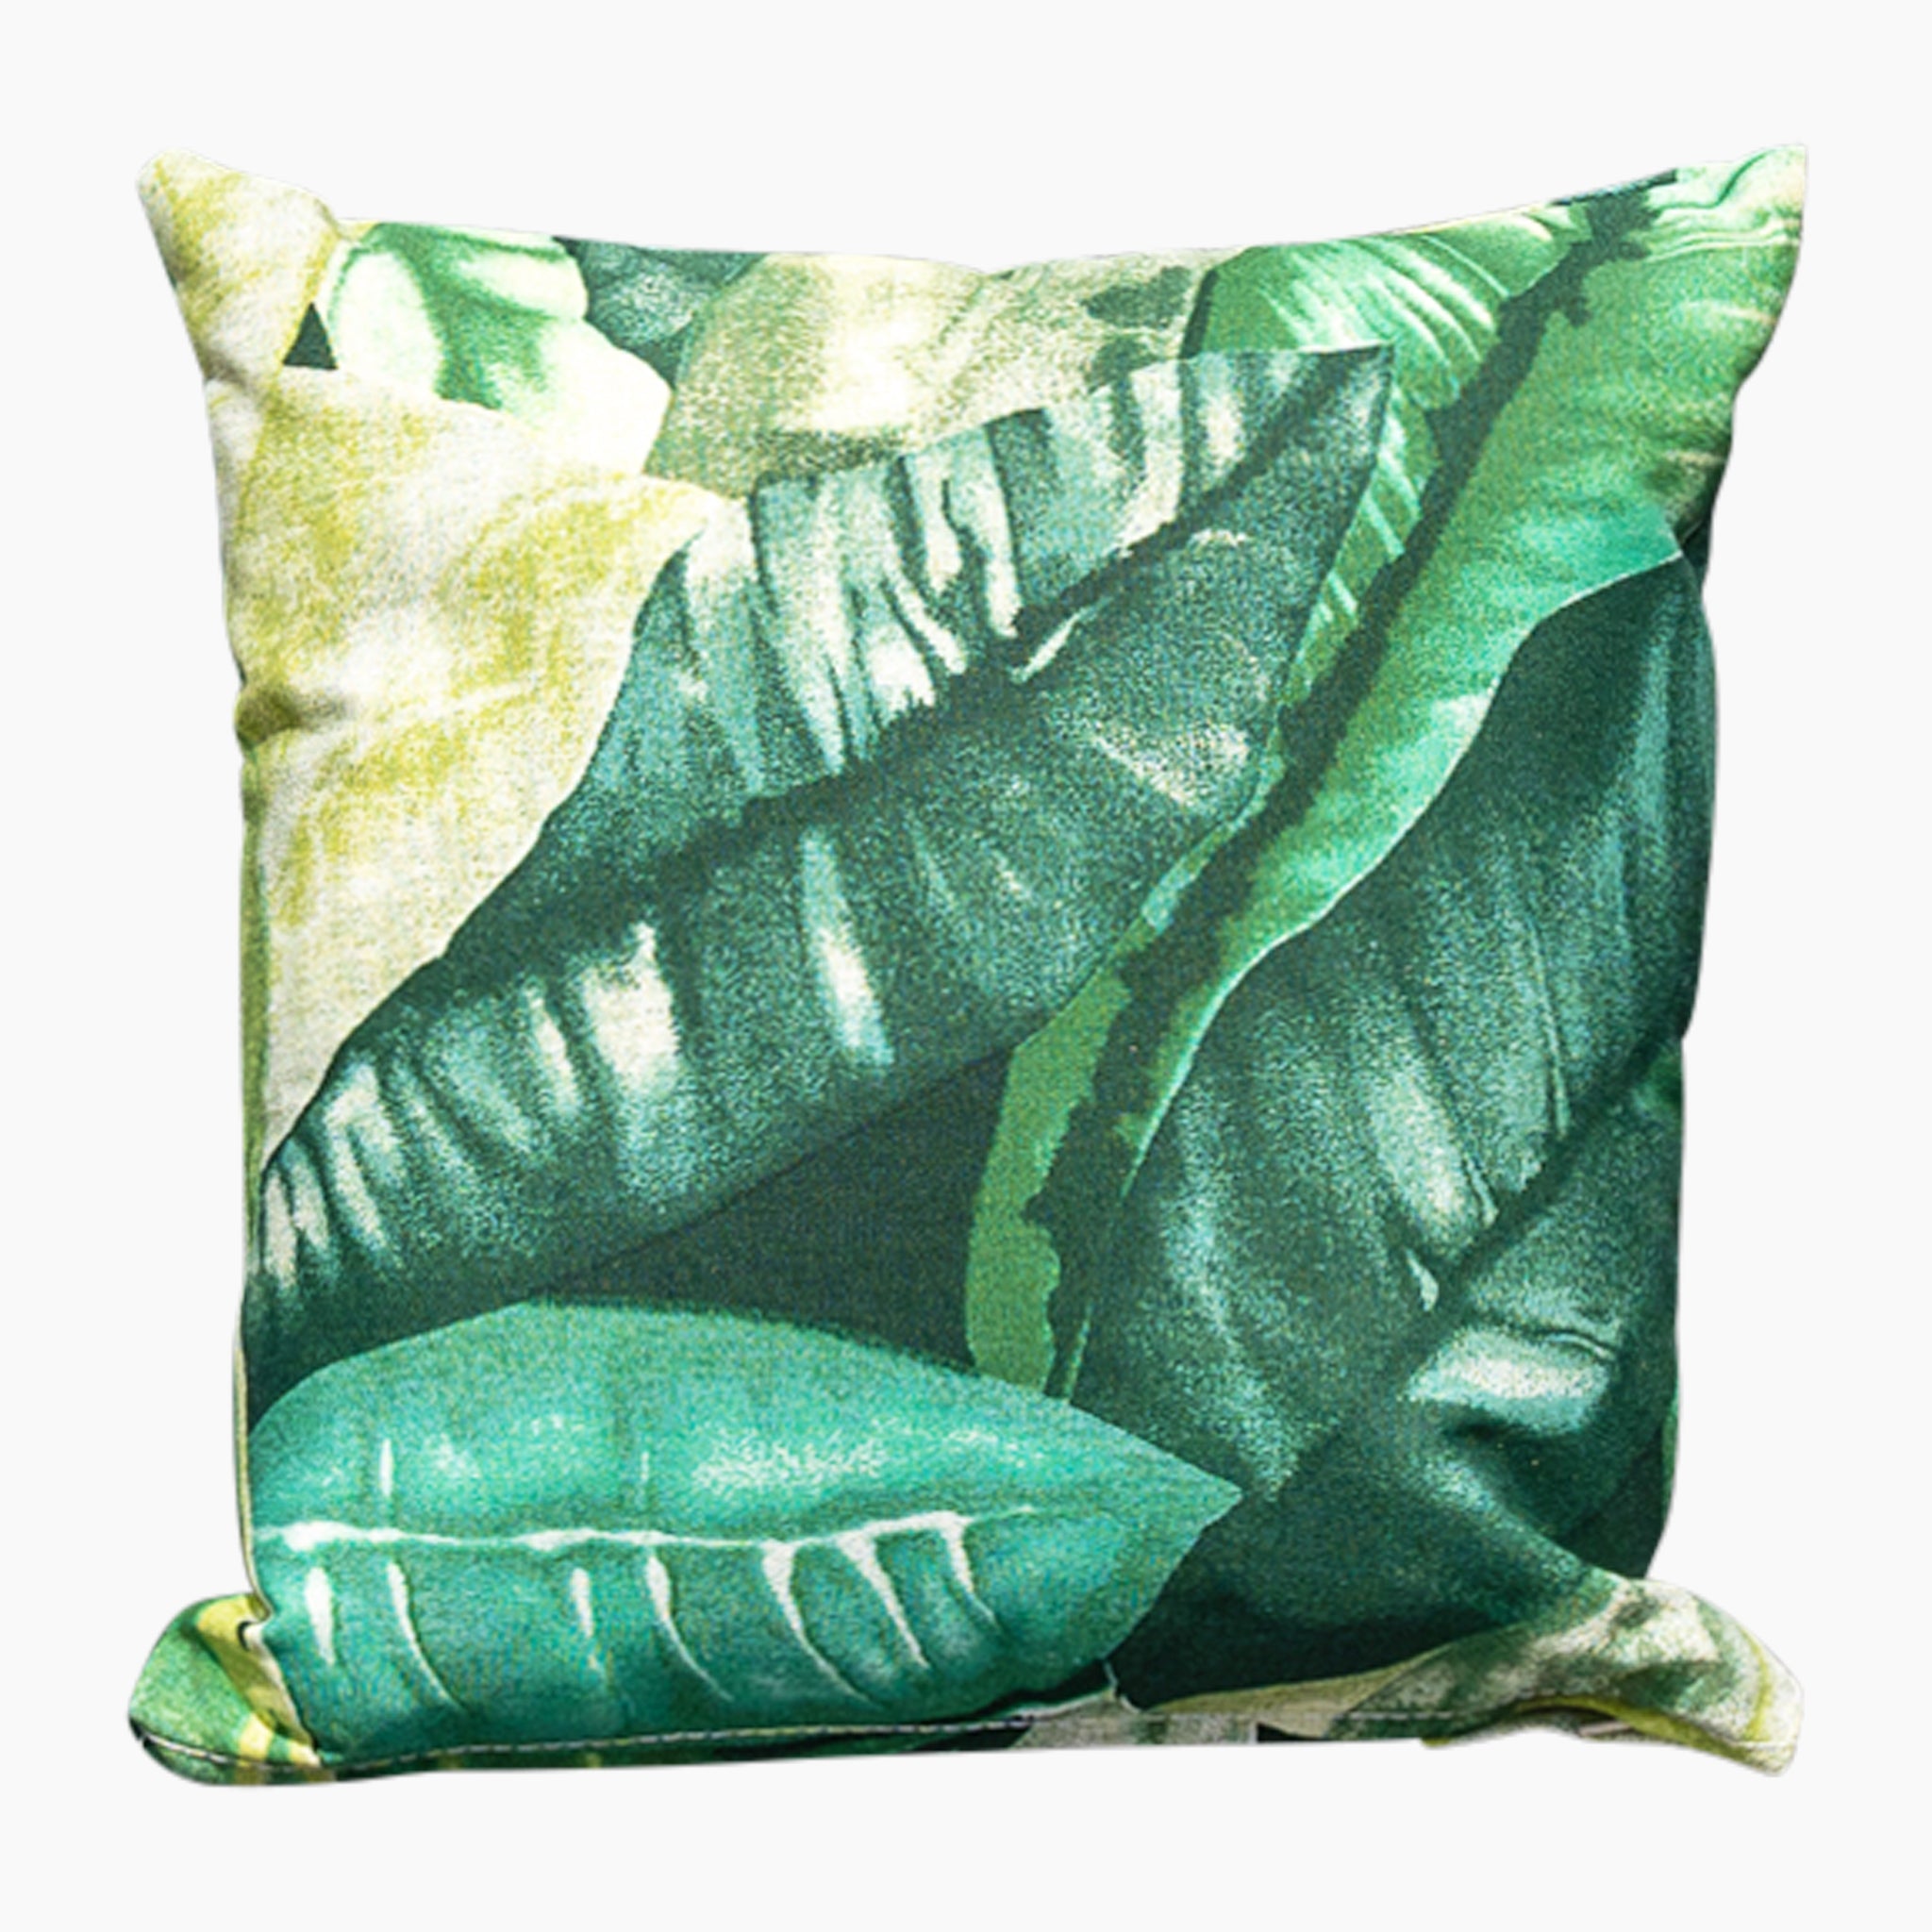 Acrisol Amazonia Verde Small Scatter Cushion - 25m x 25cm